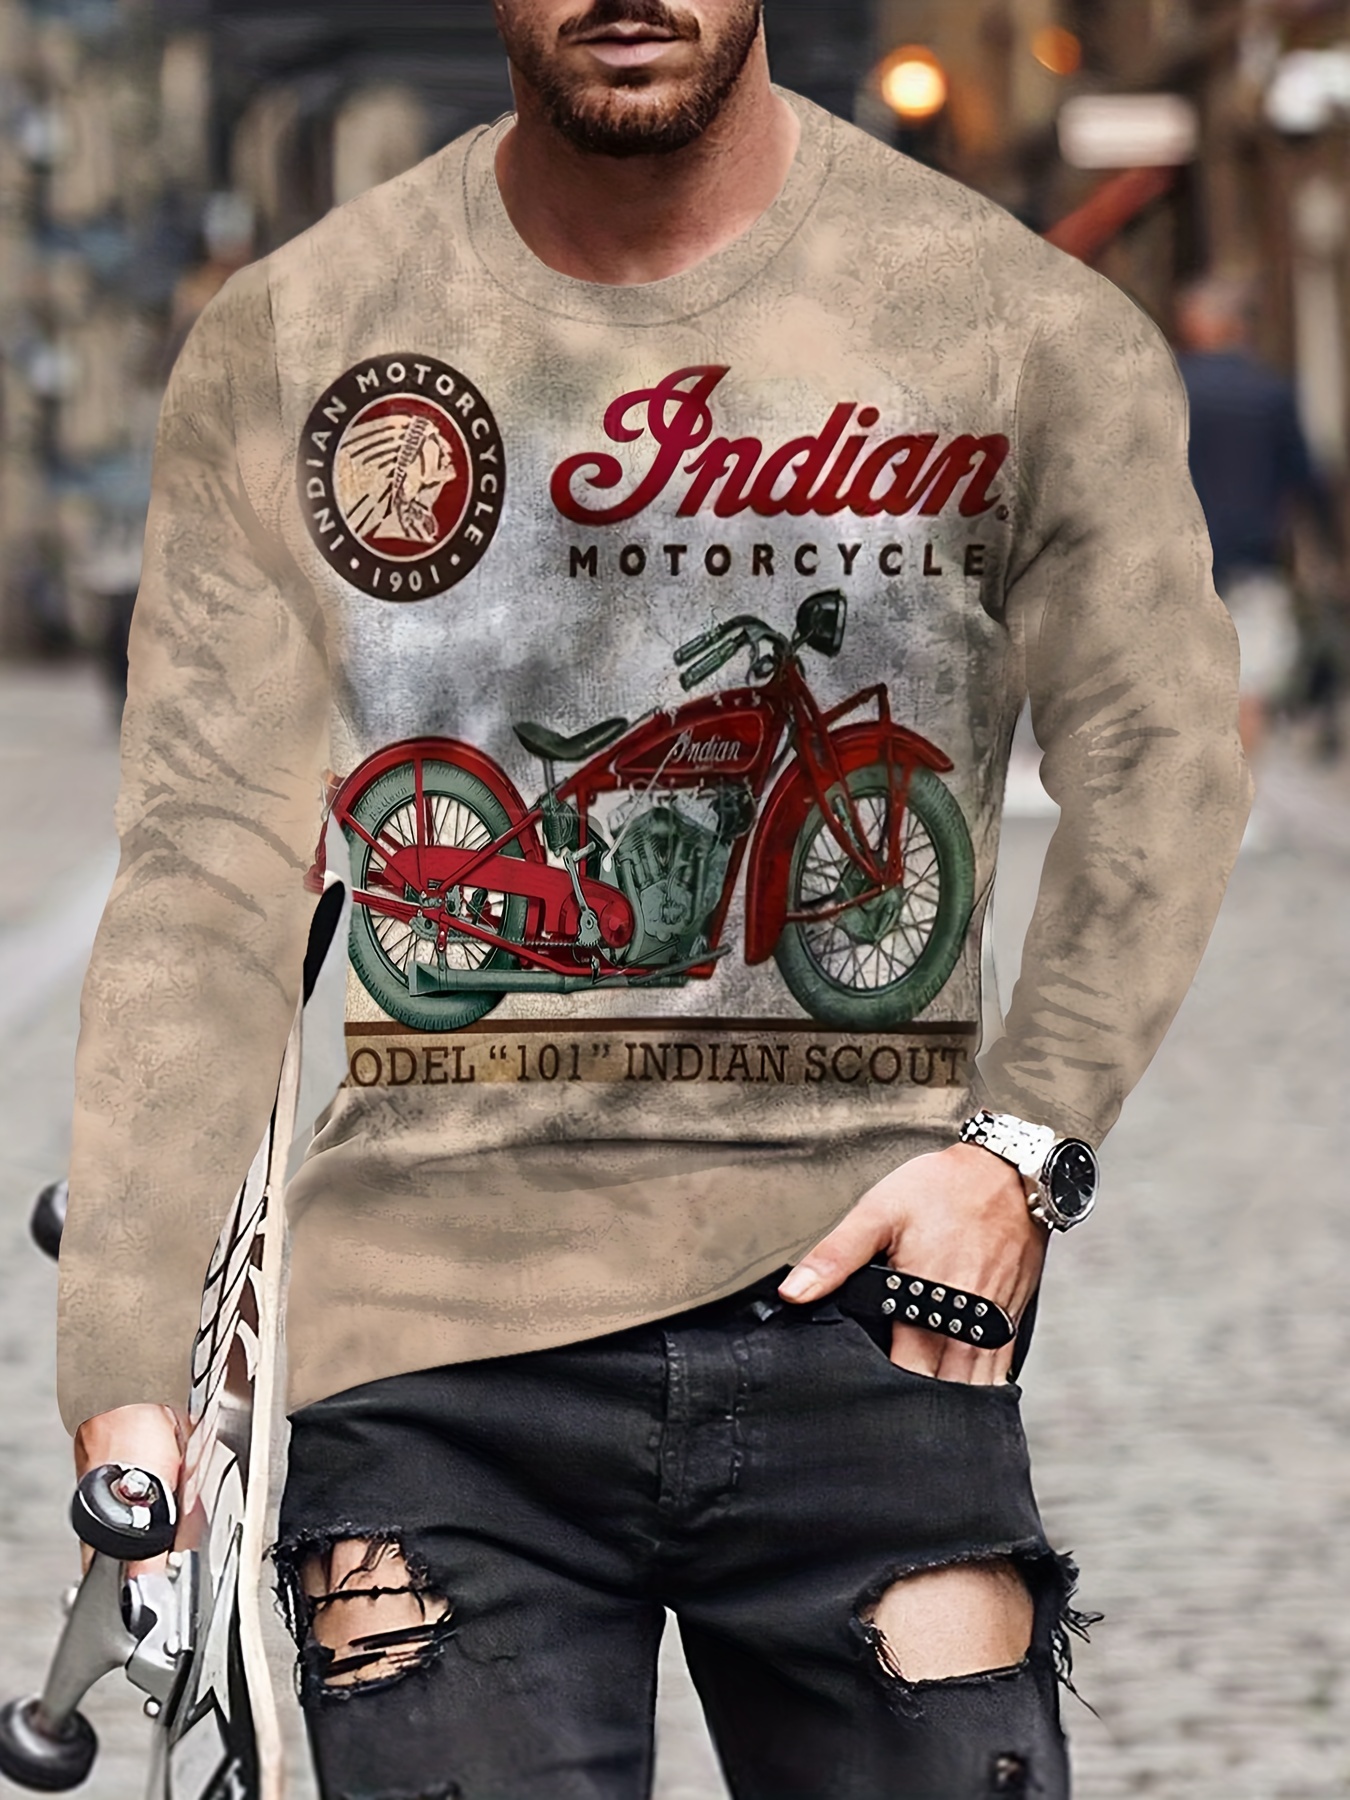 New Retro motorcycle series patterns T Shirt Graphic 3D print Tops Tees  Tshirt Streetwear Punk T-shirt Men clothes